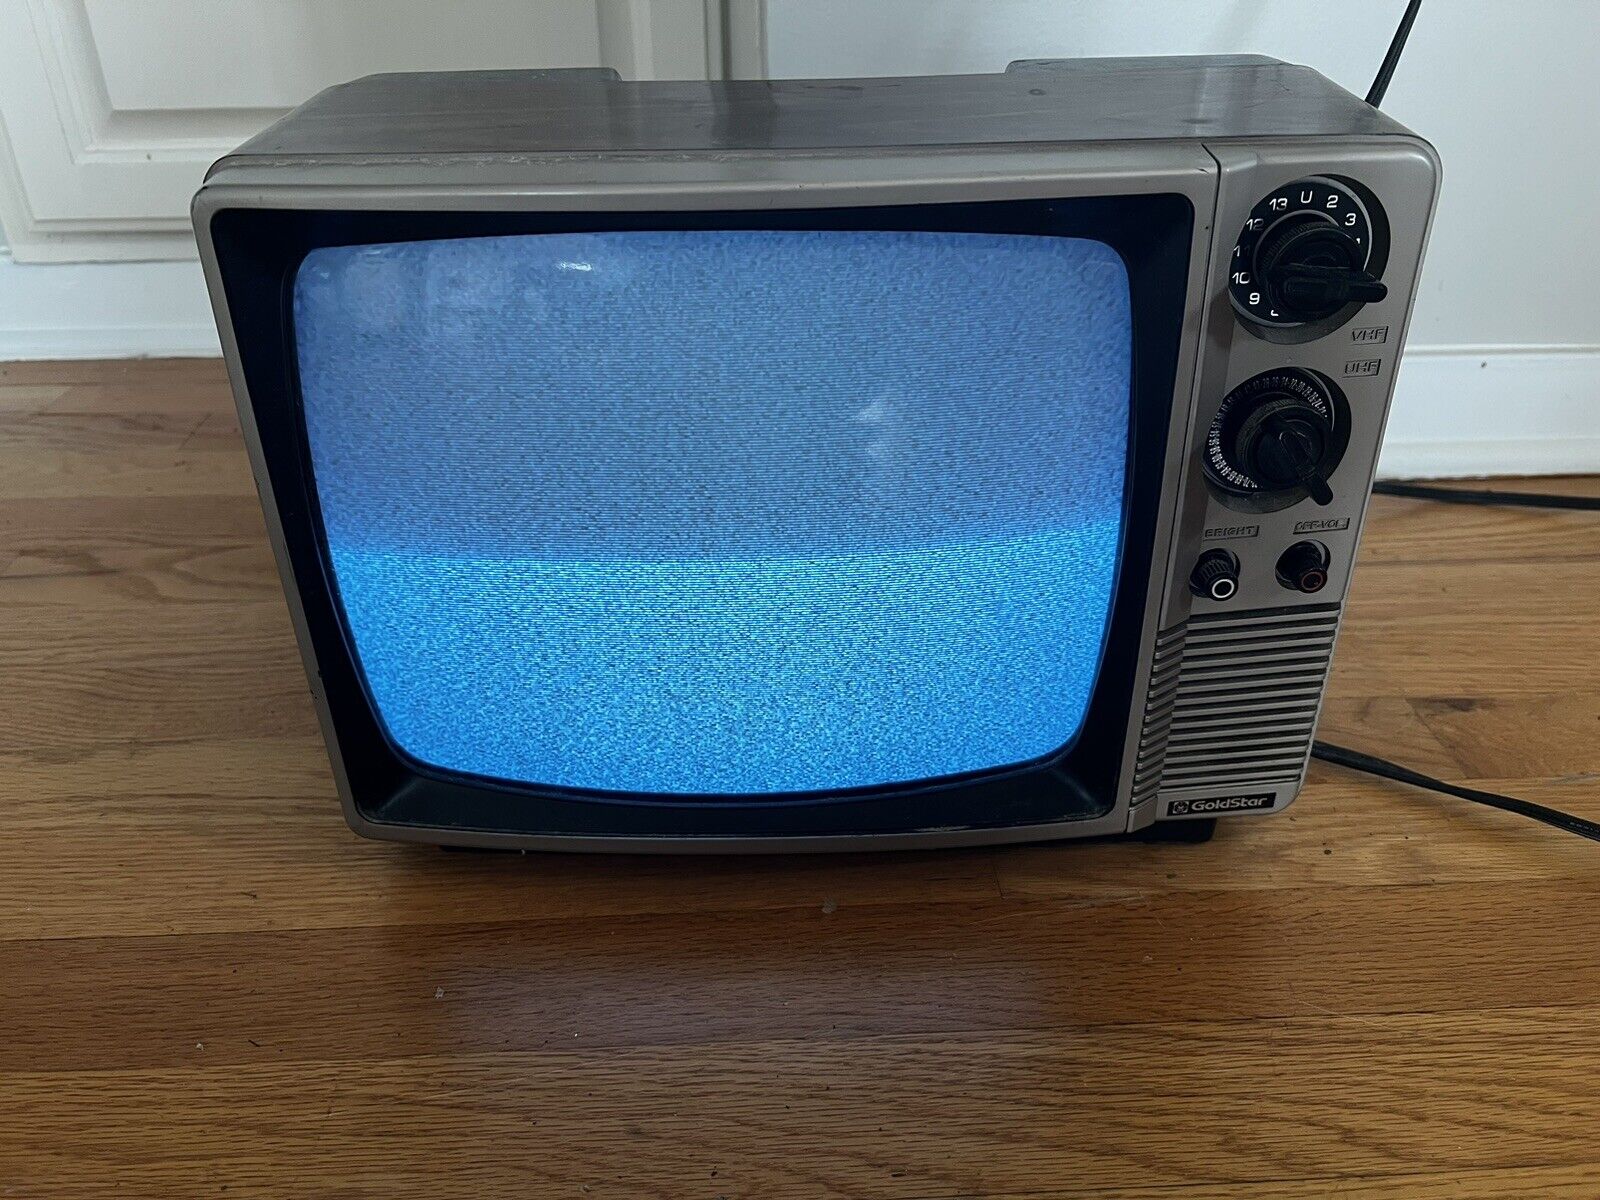 Vtg Goldstar Gaming Tv Television Portable Rca 1980s Gte Receiver Retro Bmx2060